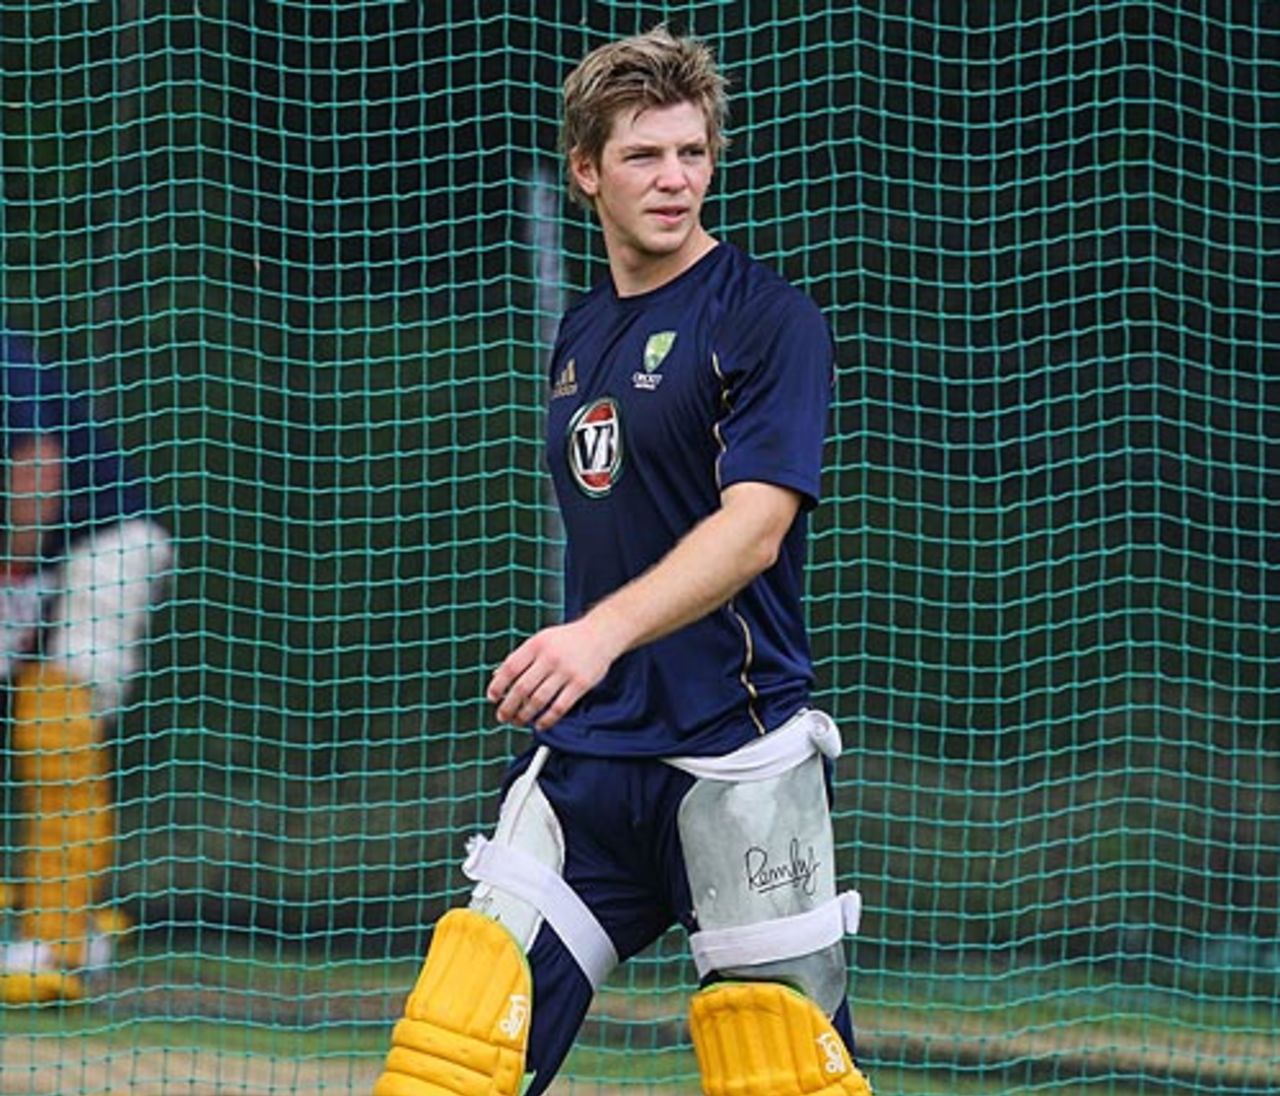 Tim Paine at the nets, Brisbane, April 22, 2010